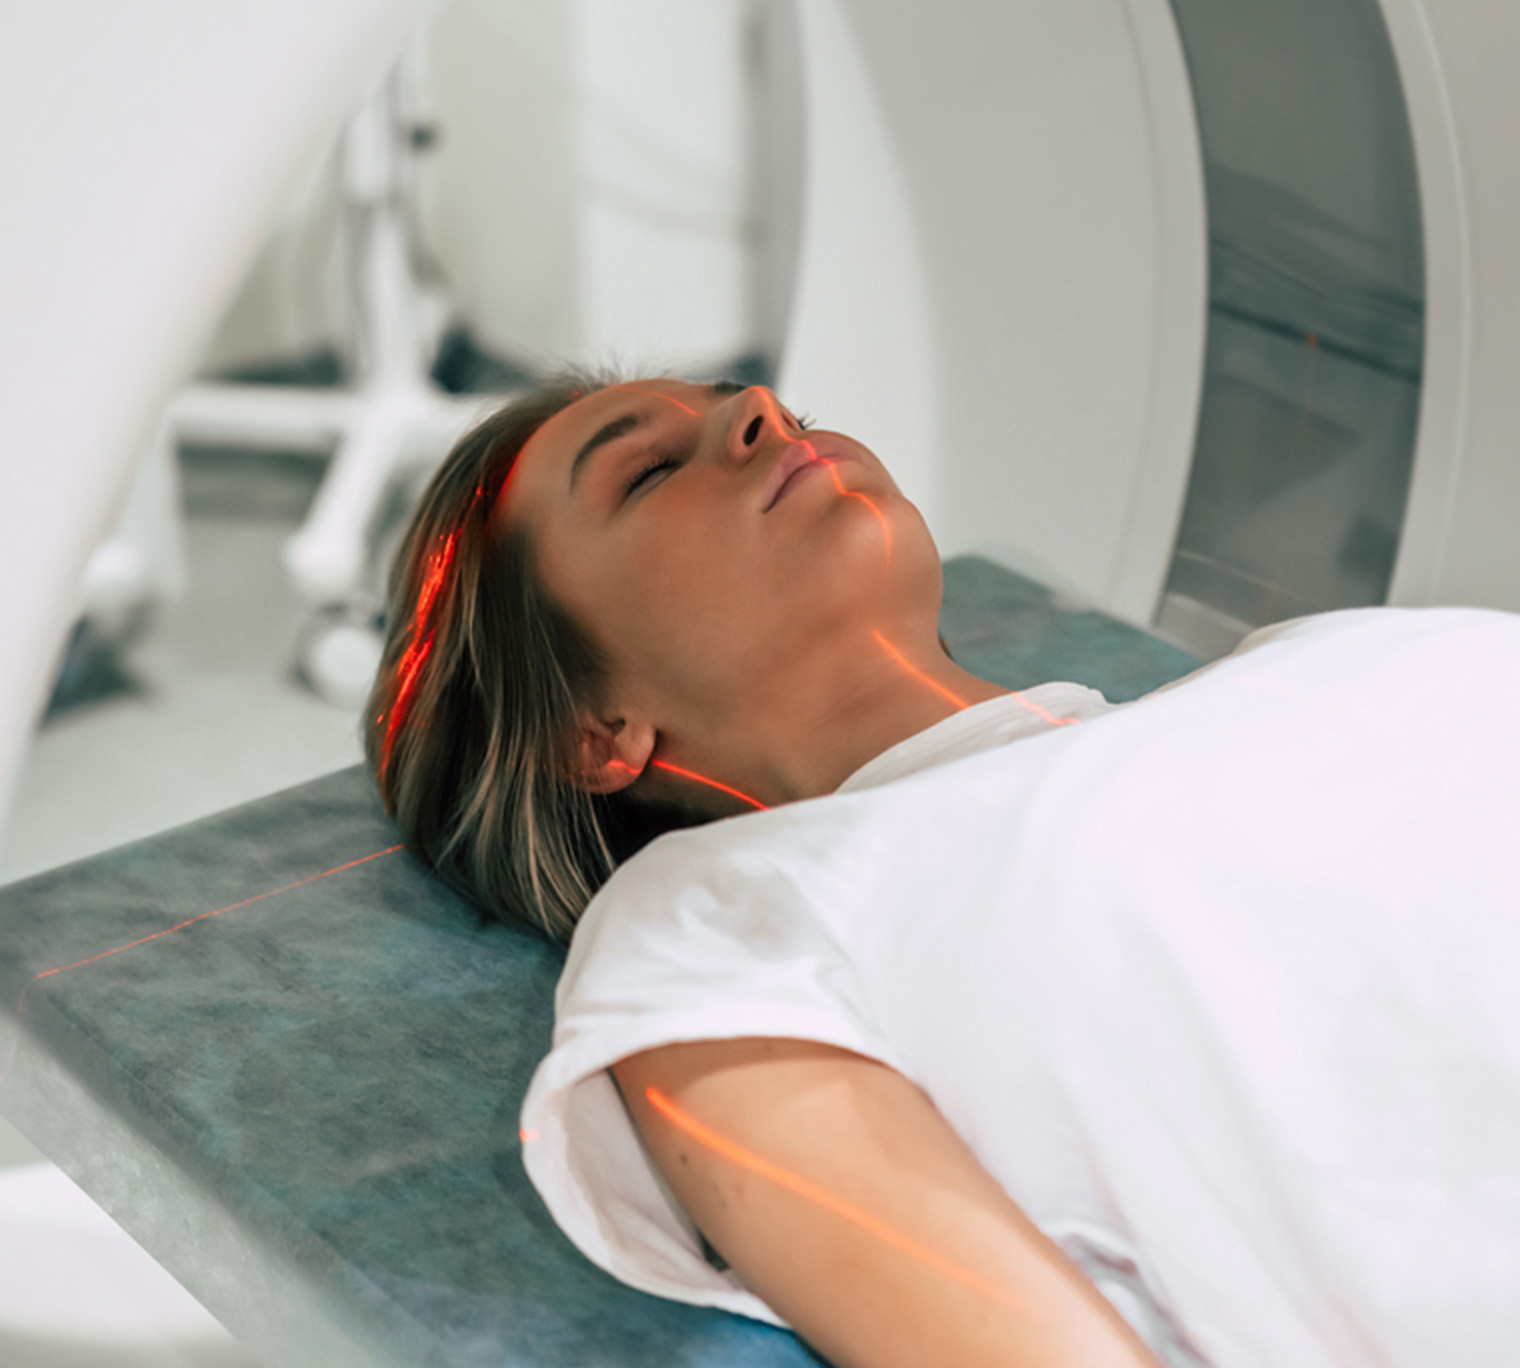 Woman lying in hospital MRI machine.